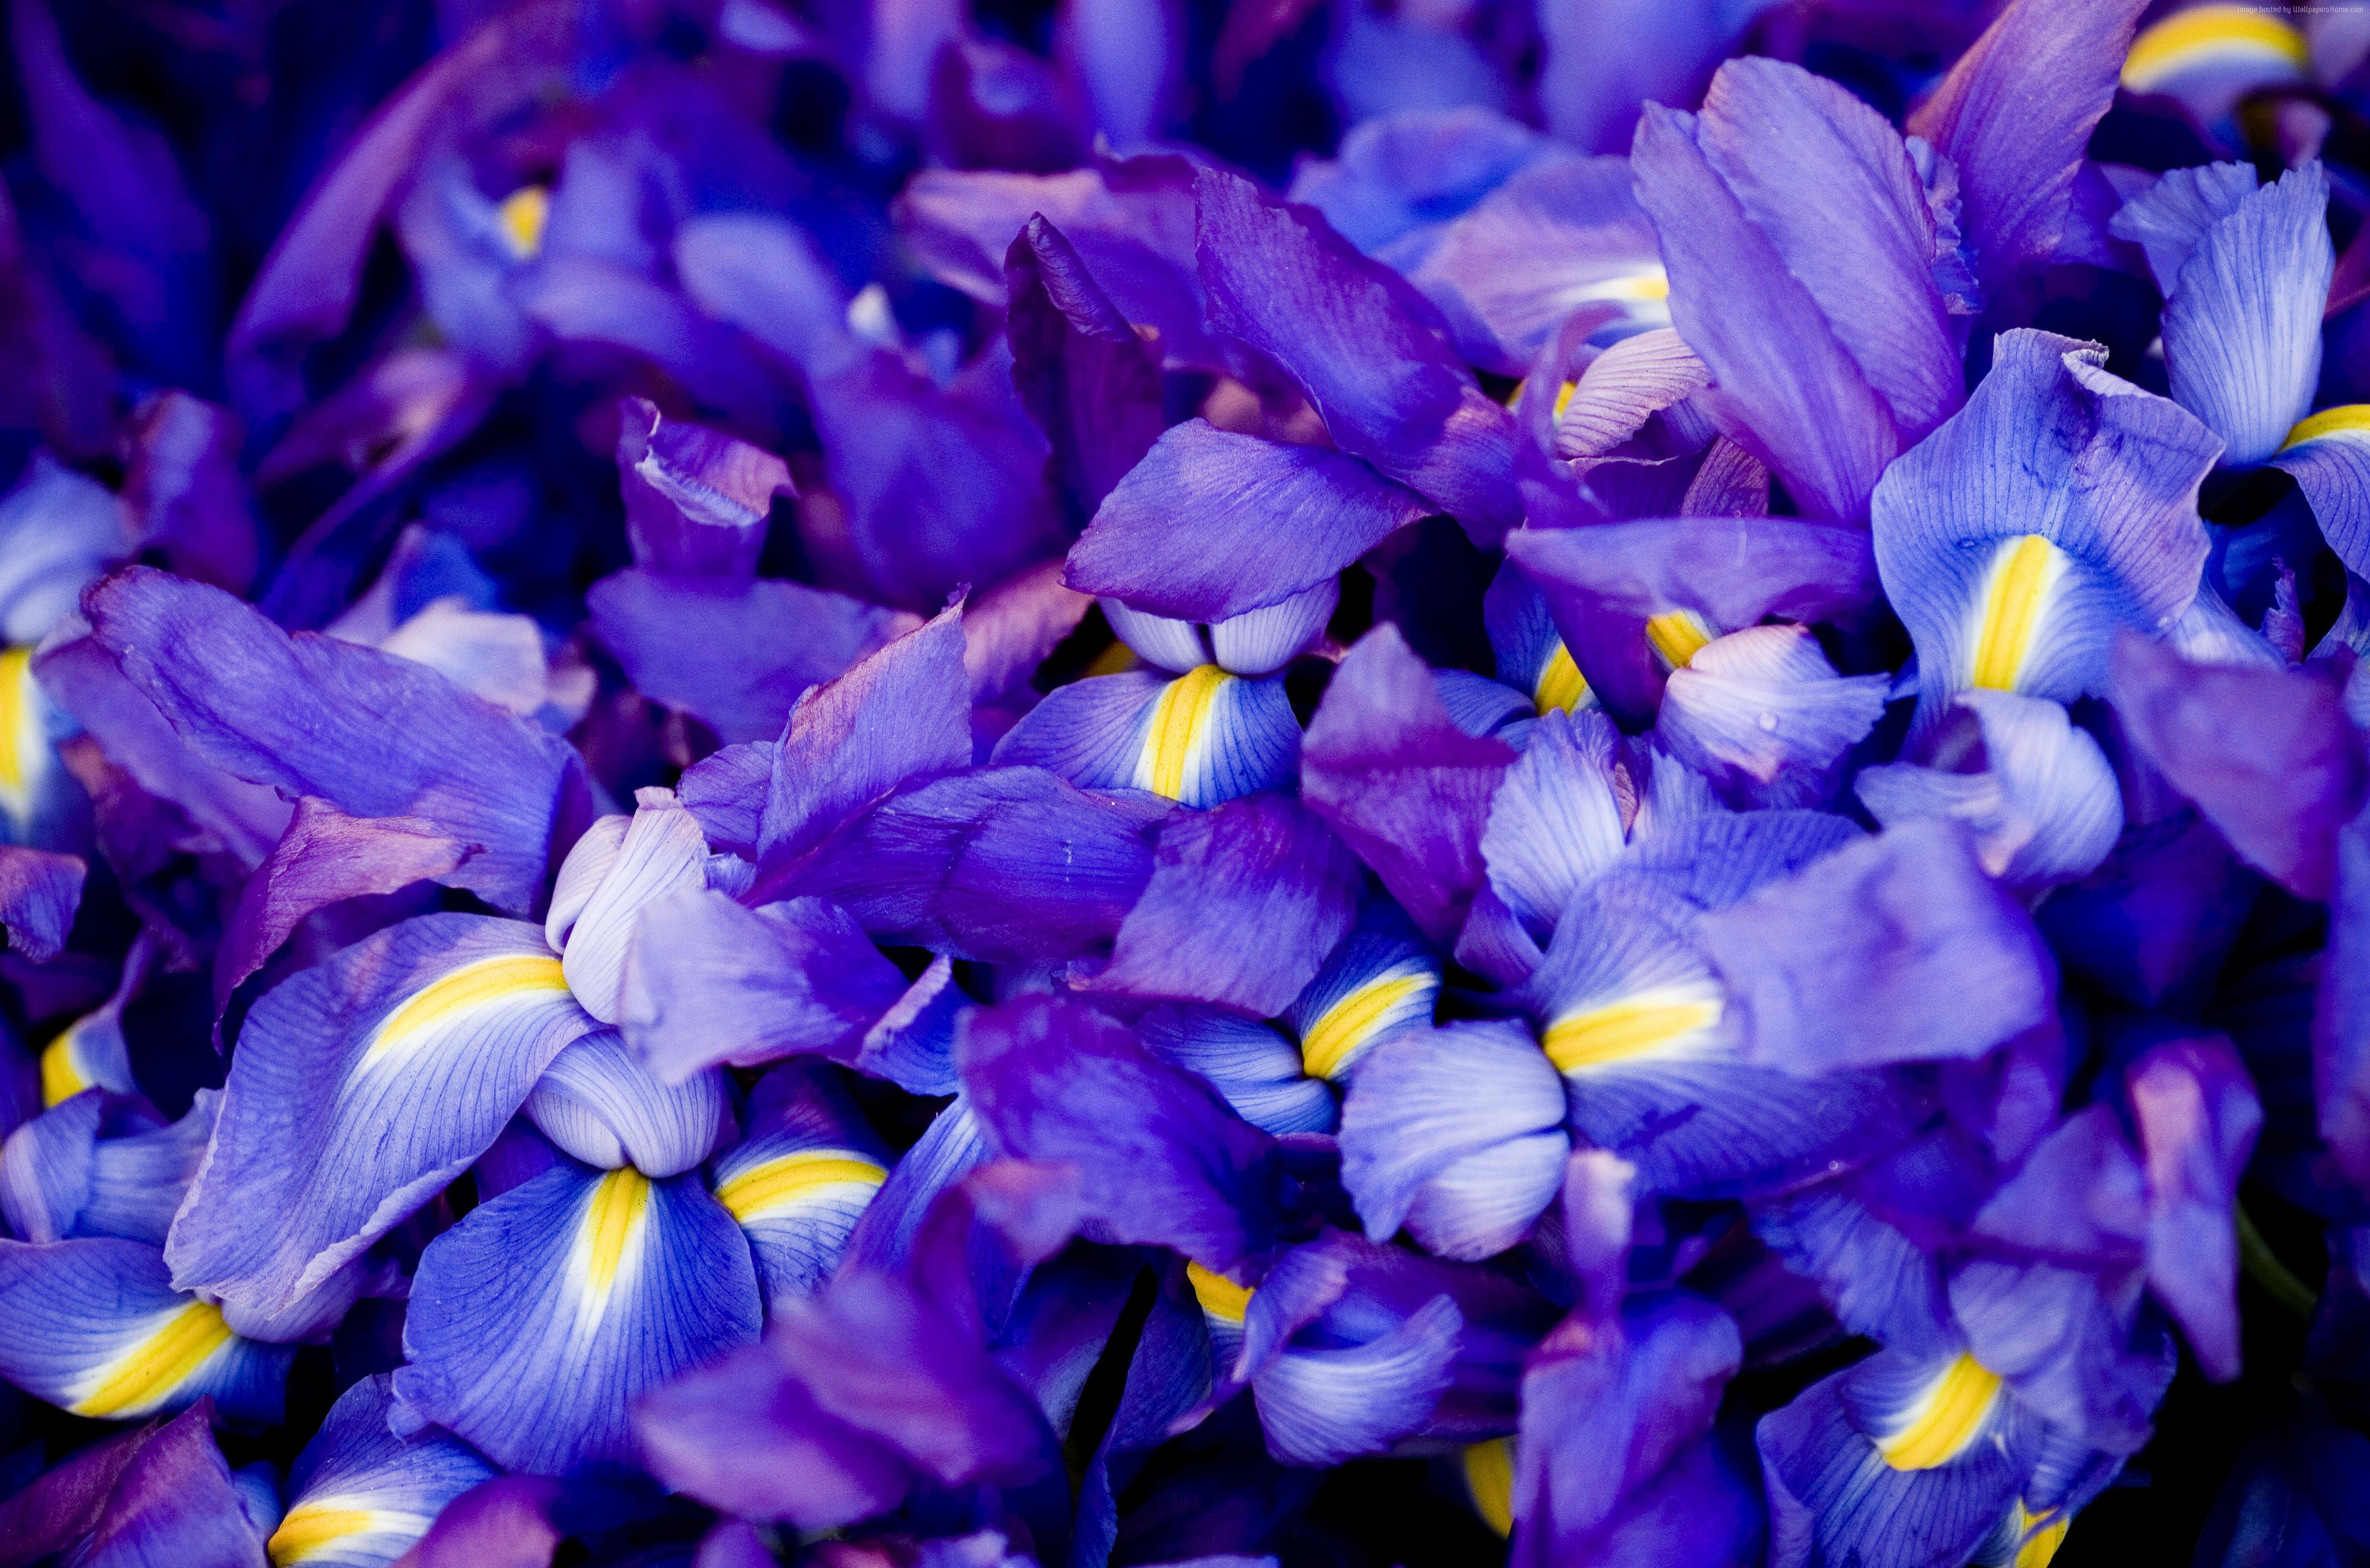 k, #purple, #macro, #flowers, #Iris, k wallpaper. Nature